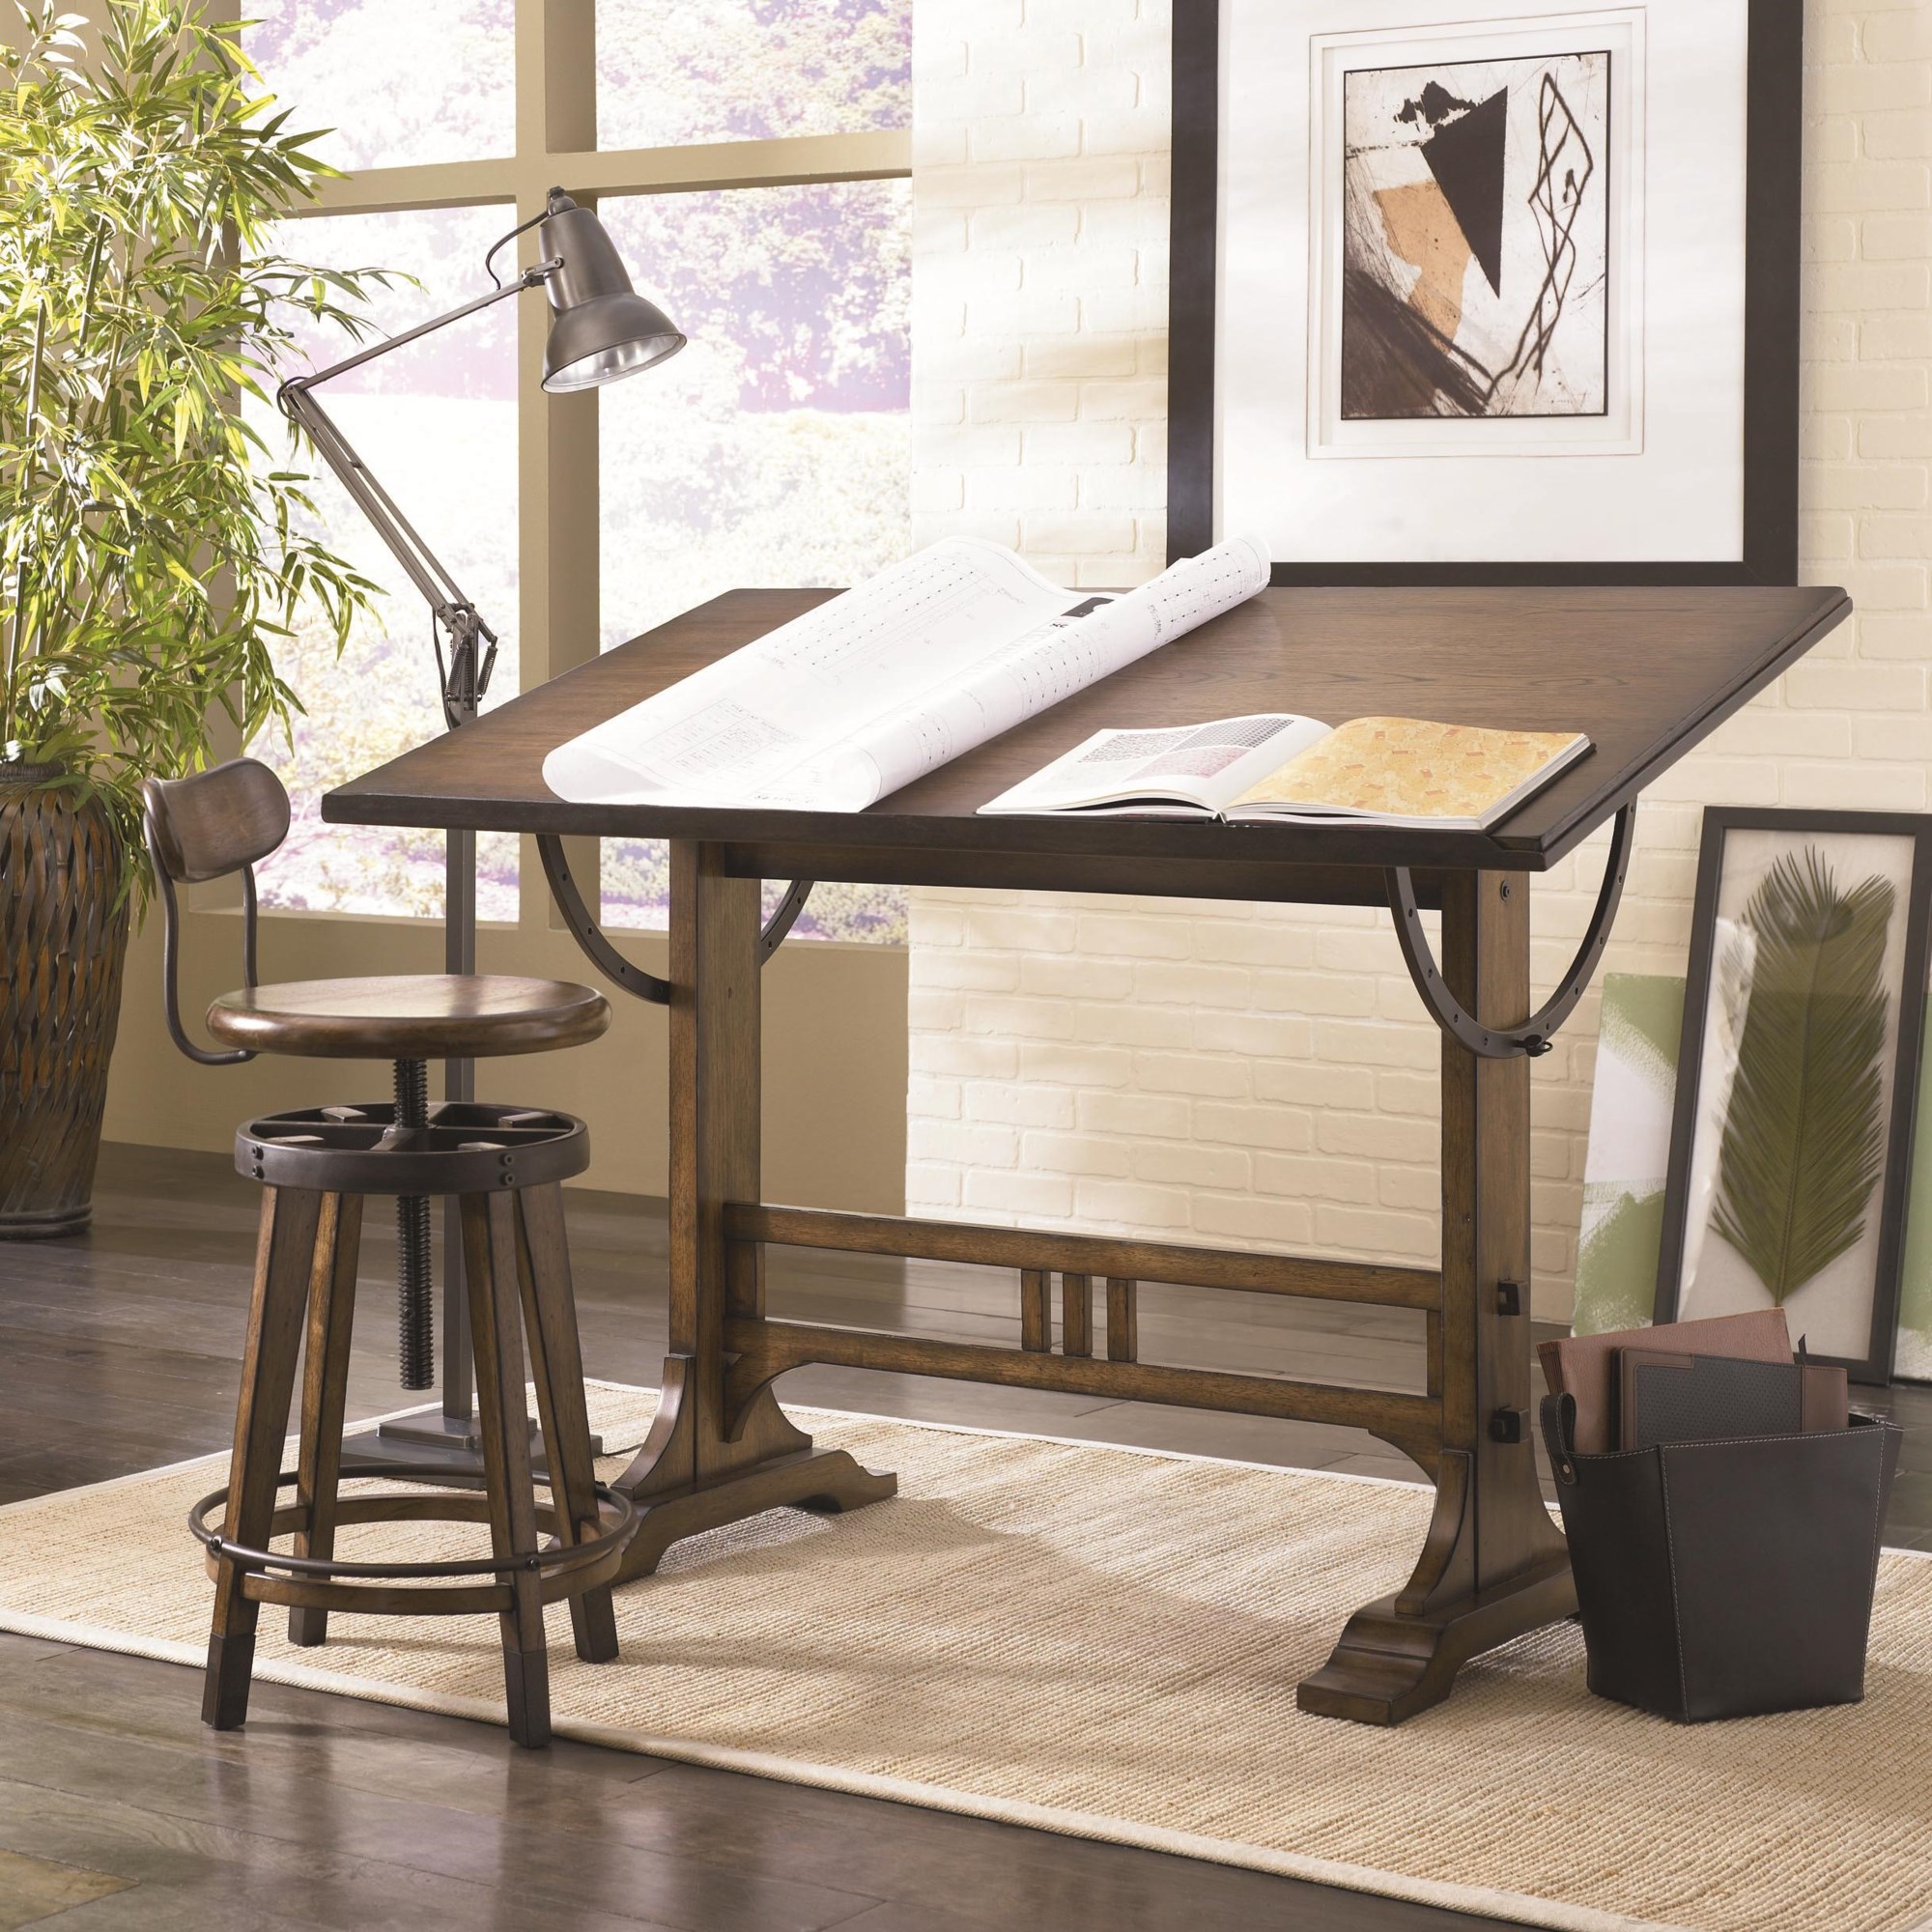 Wayside Studio Weathered Home Architect Oak | Desks Mission - Furniture Hammary Table & Mattress | Desk Desk 166-940